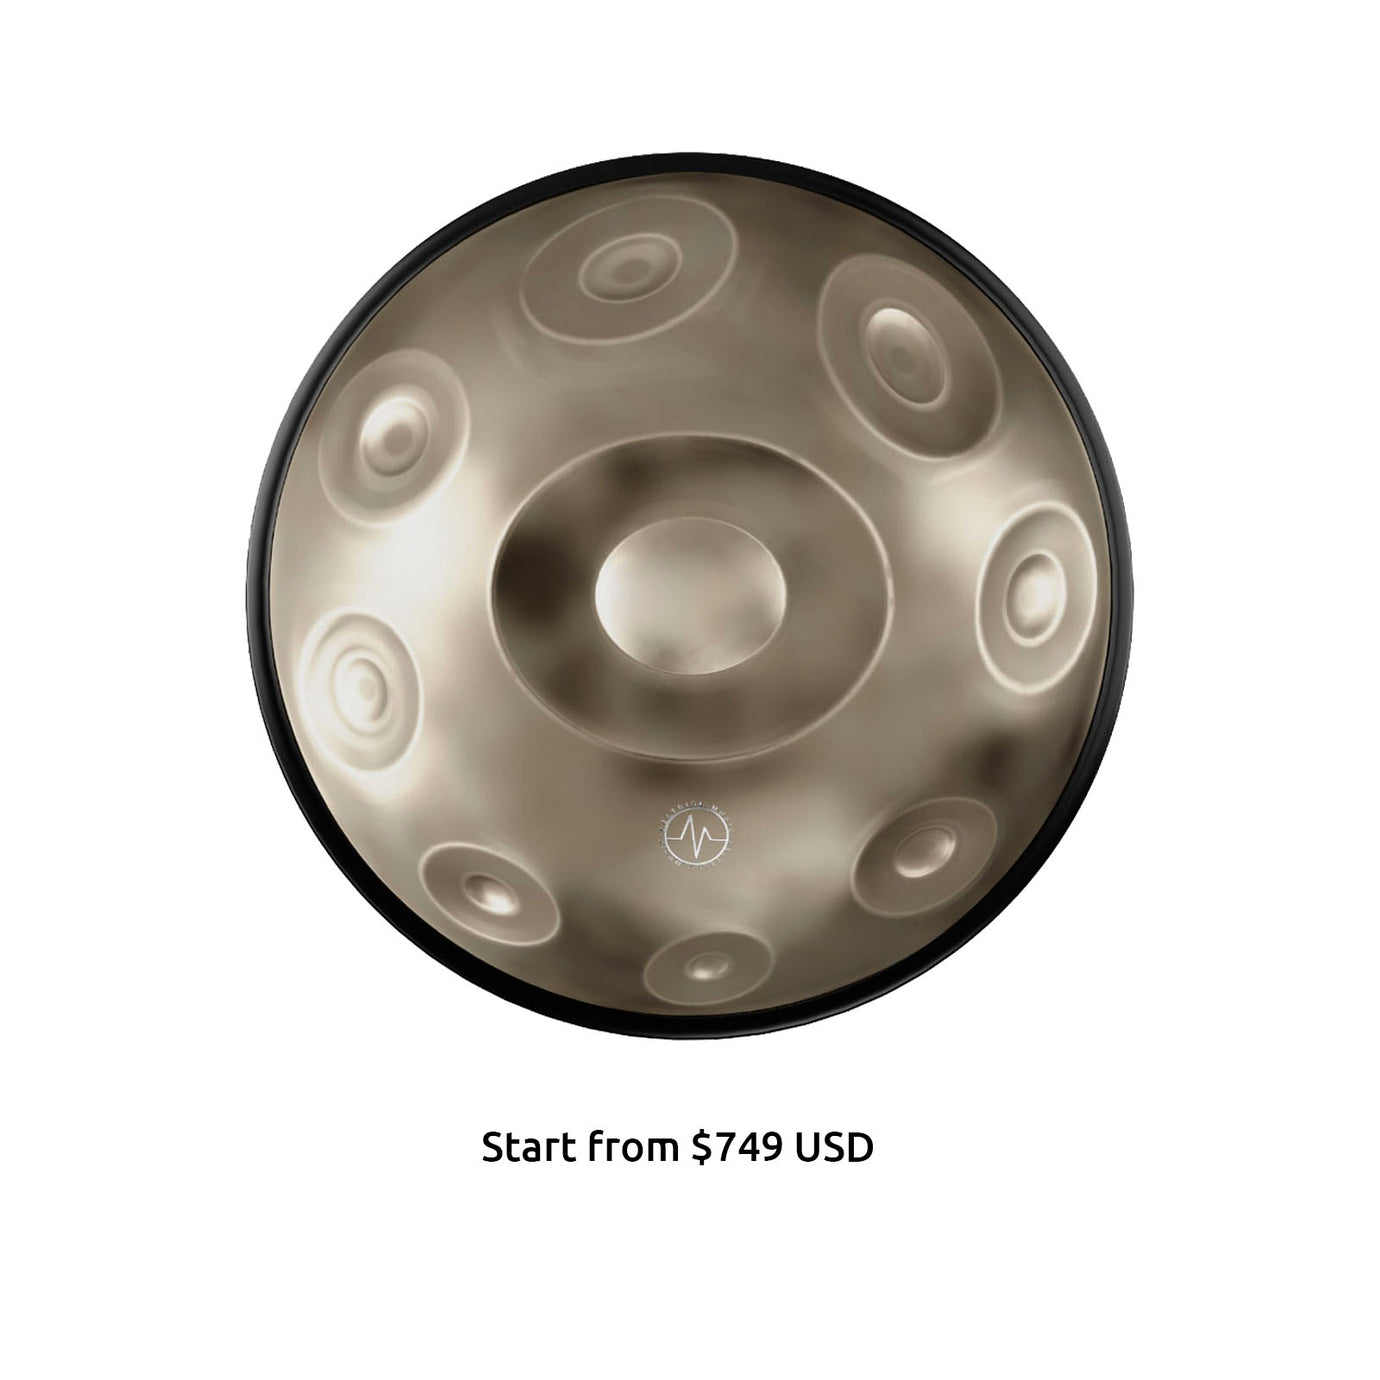 「StartSonic」Series - Stainless Steel Handpan